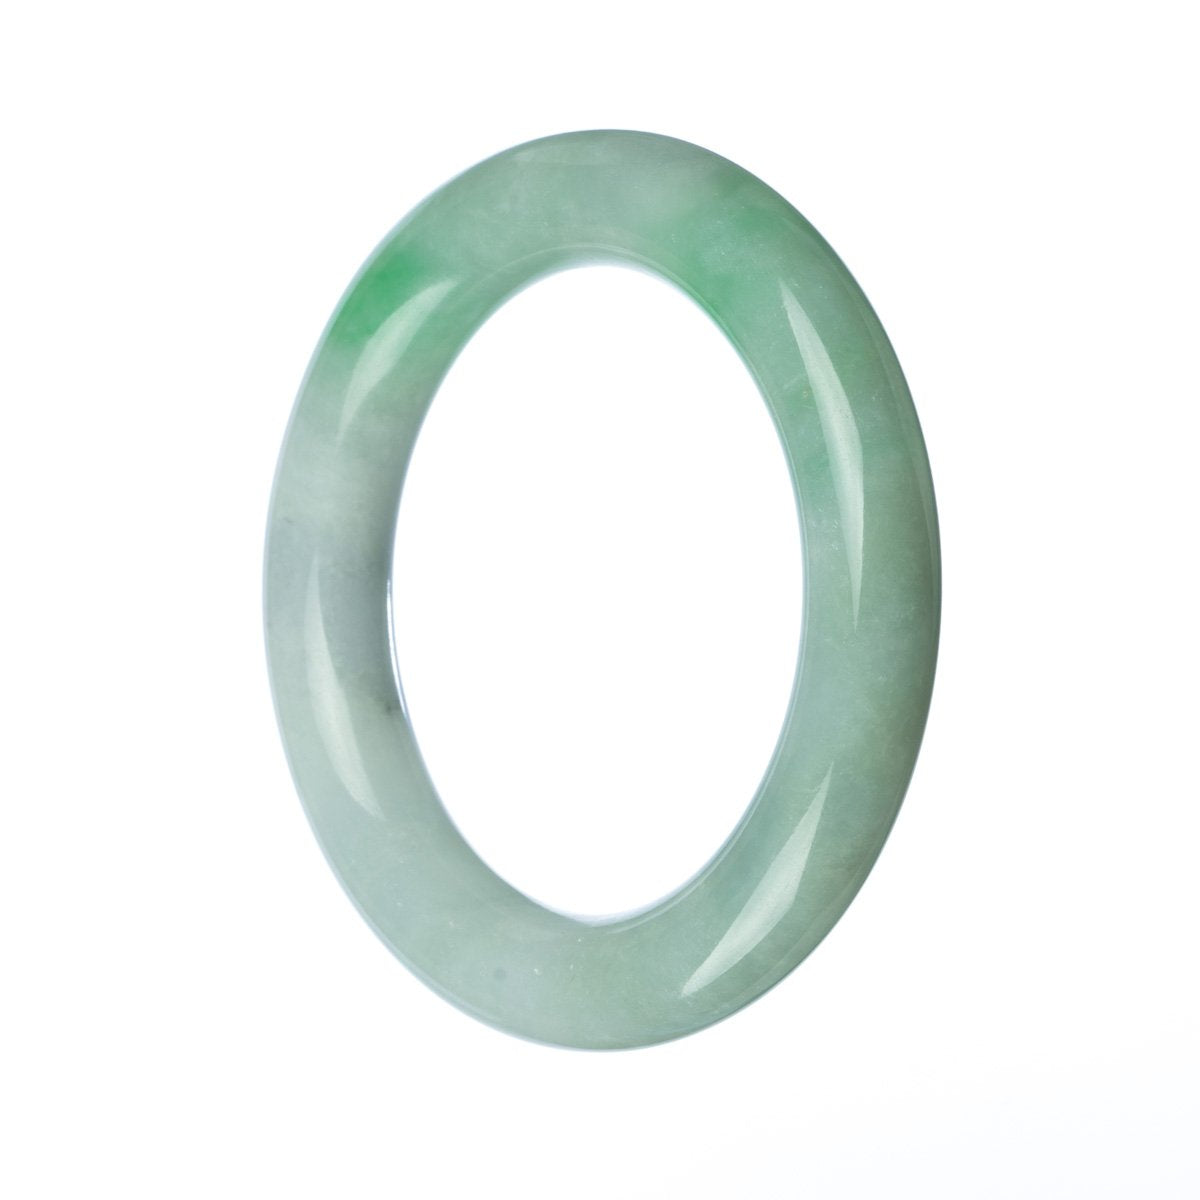 A round, 58mm genuine Type A green jadeite jade bangle bracelet from MAYS™.